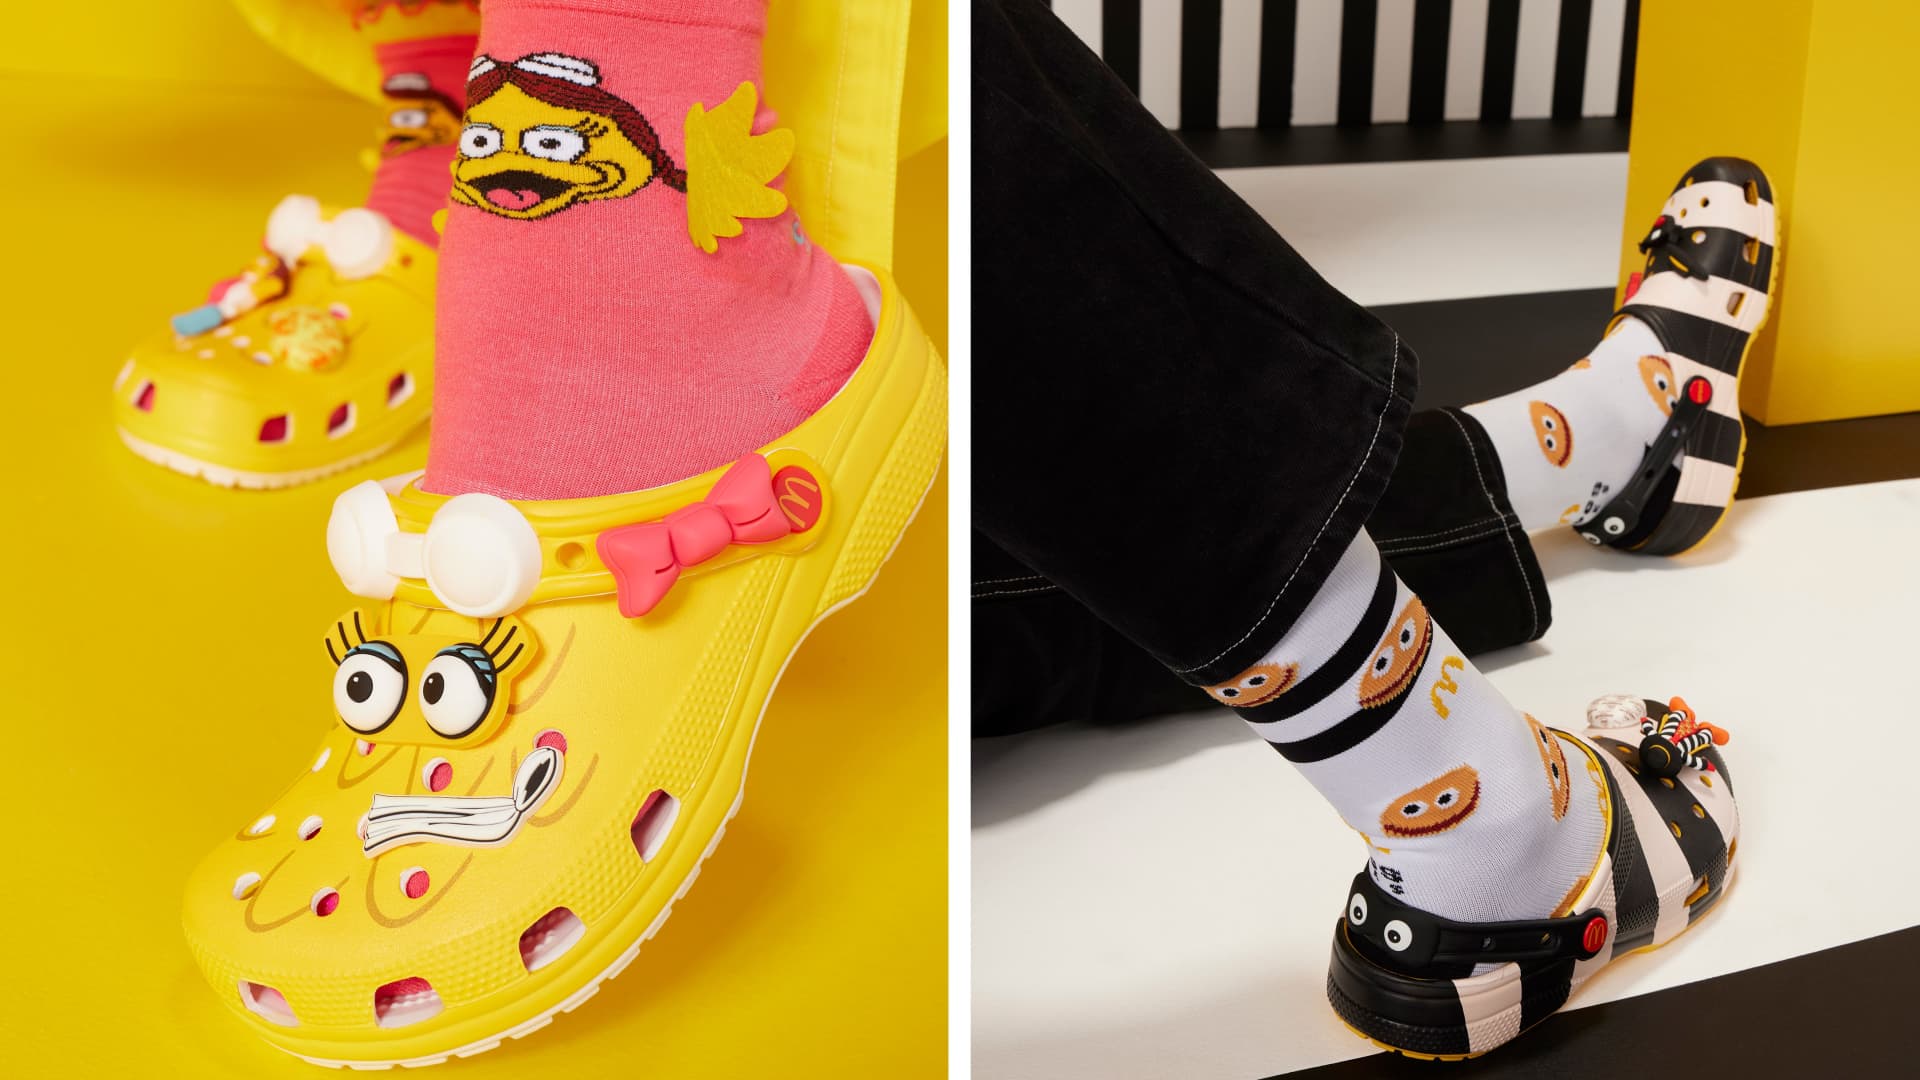 McDonald's x Crocs designs inspired by Birdie and the Hamburglar.